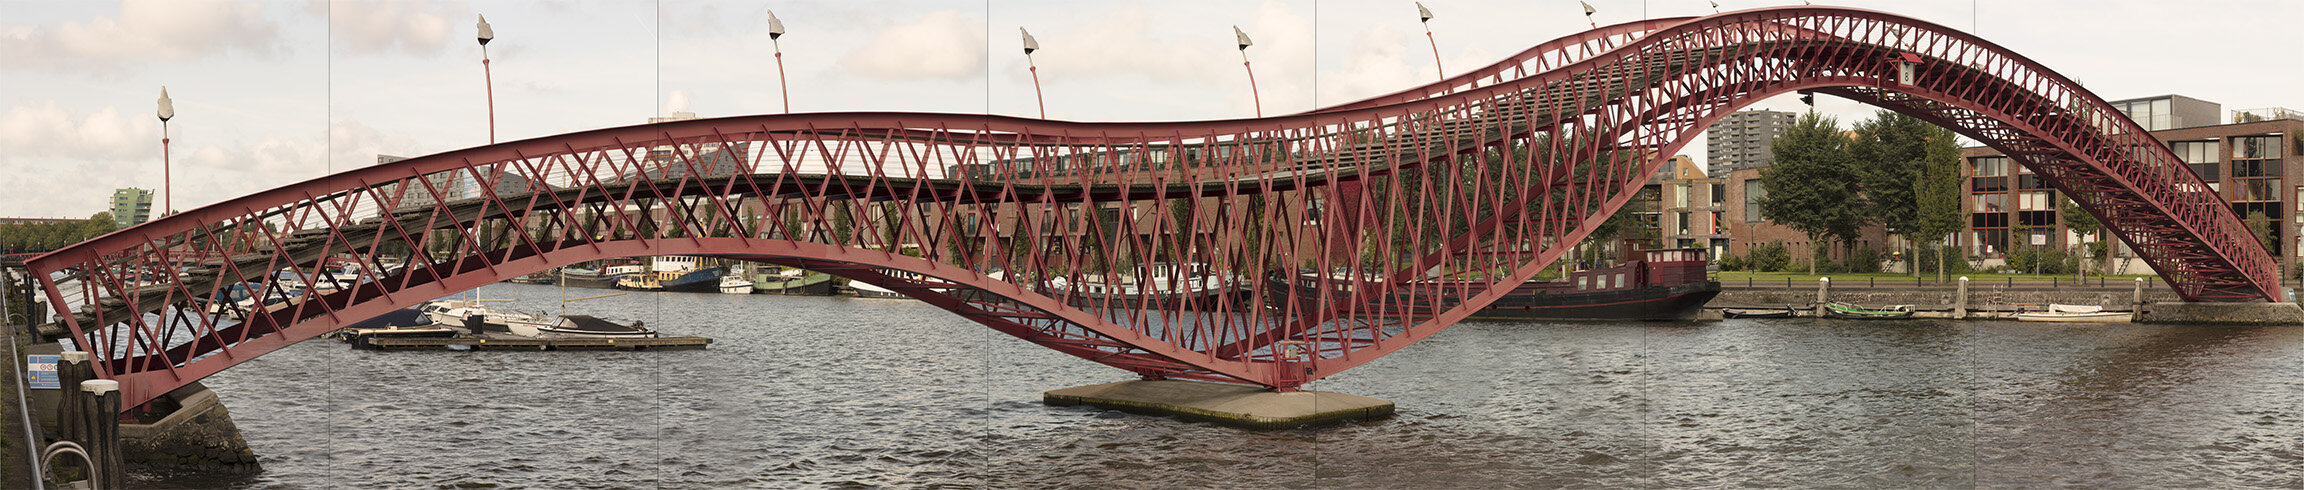 Phython Borneo Foot Bridge, Rotterdam, Netherlands 2015  98in. x 24in.jpg